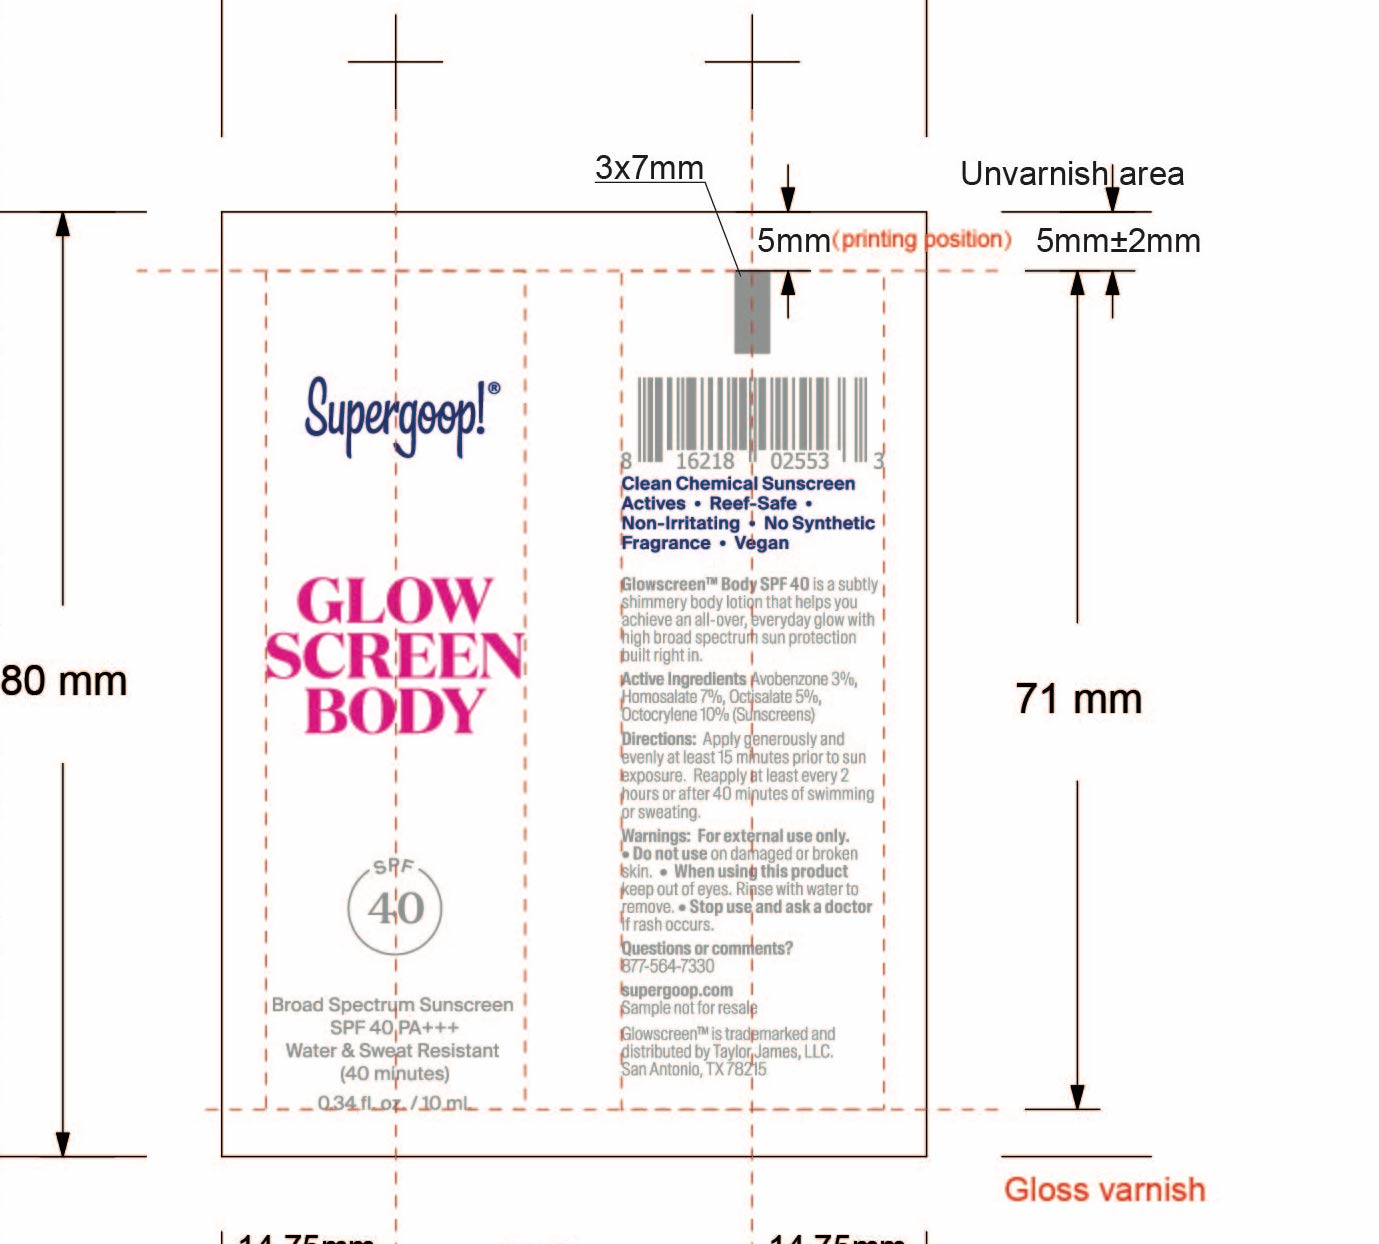 Glowscreen Body tube